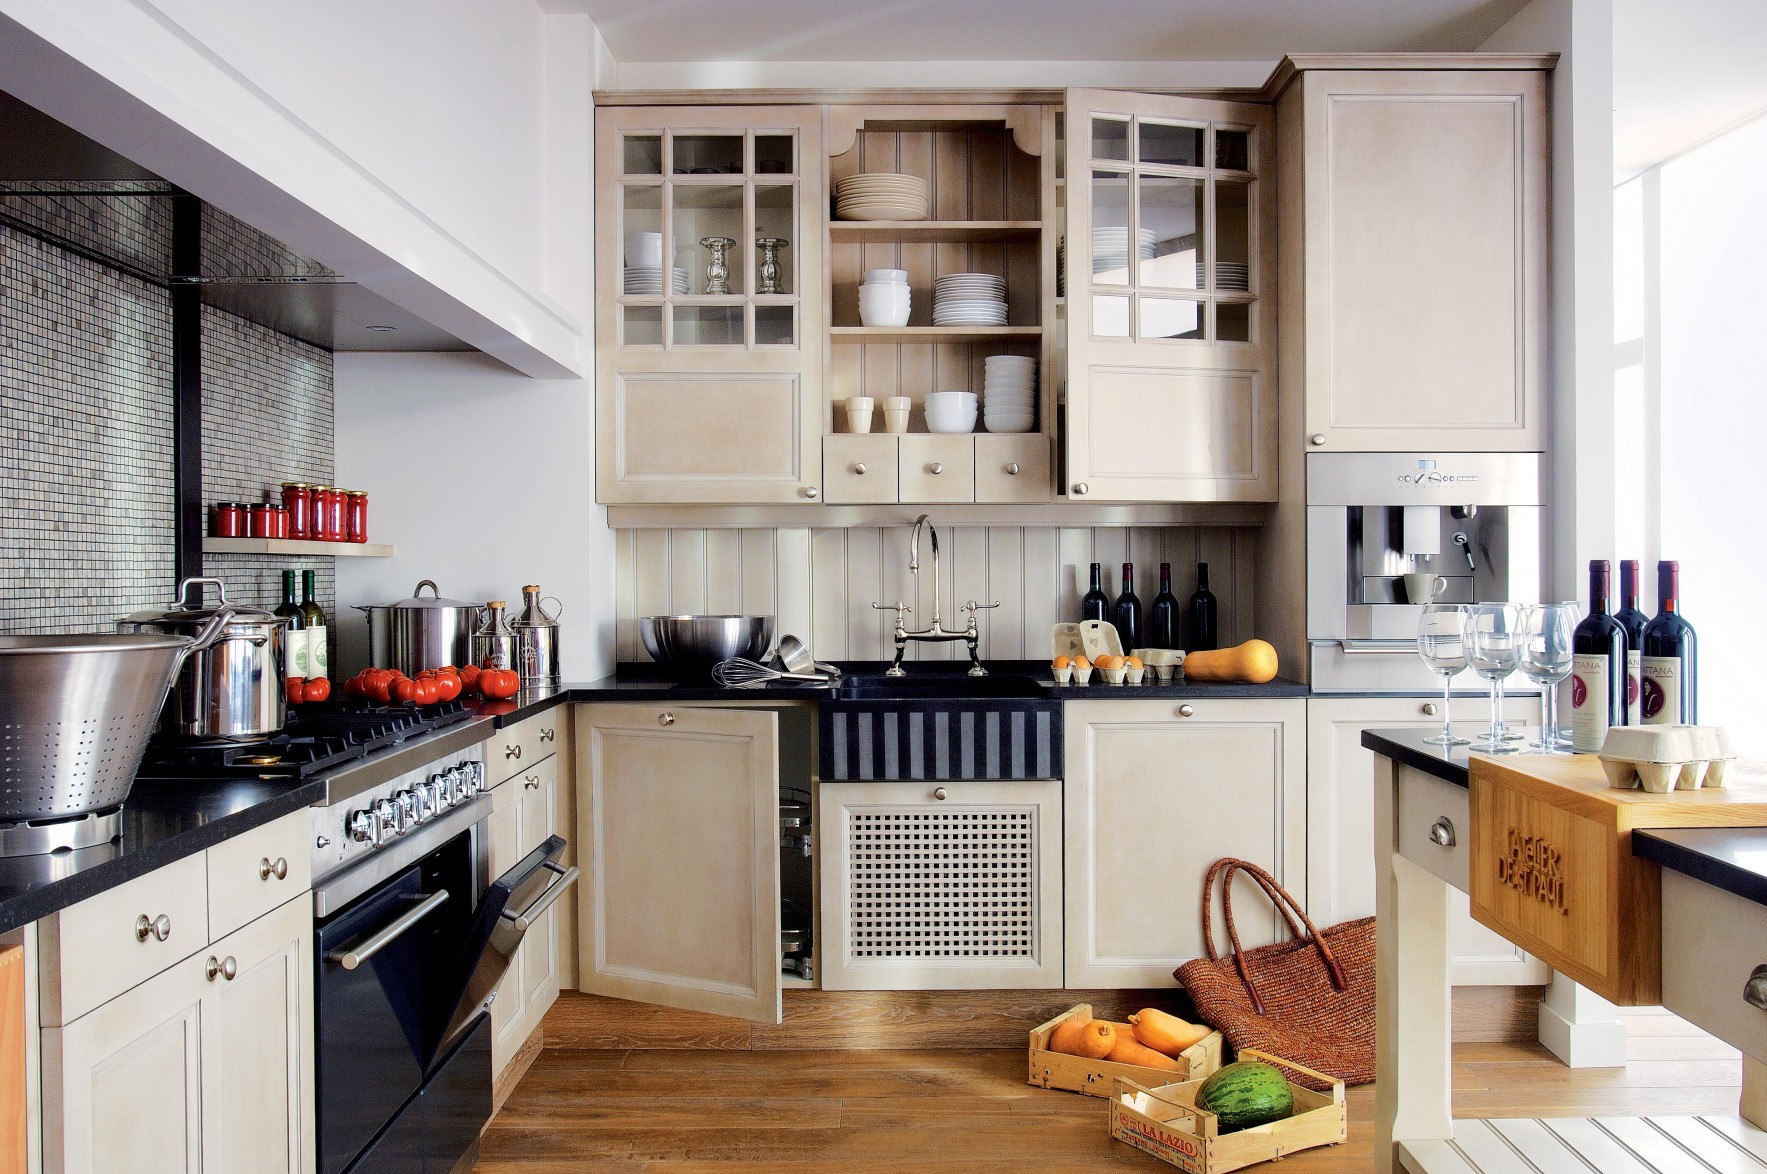 Fine wood cabinetmaking in this stunning bespoke kitchen